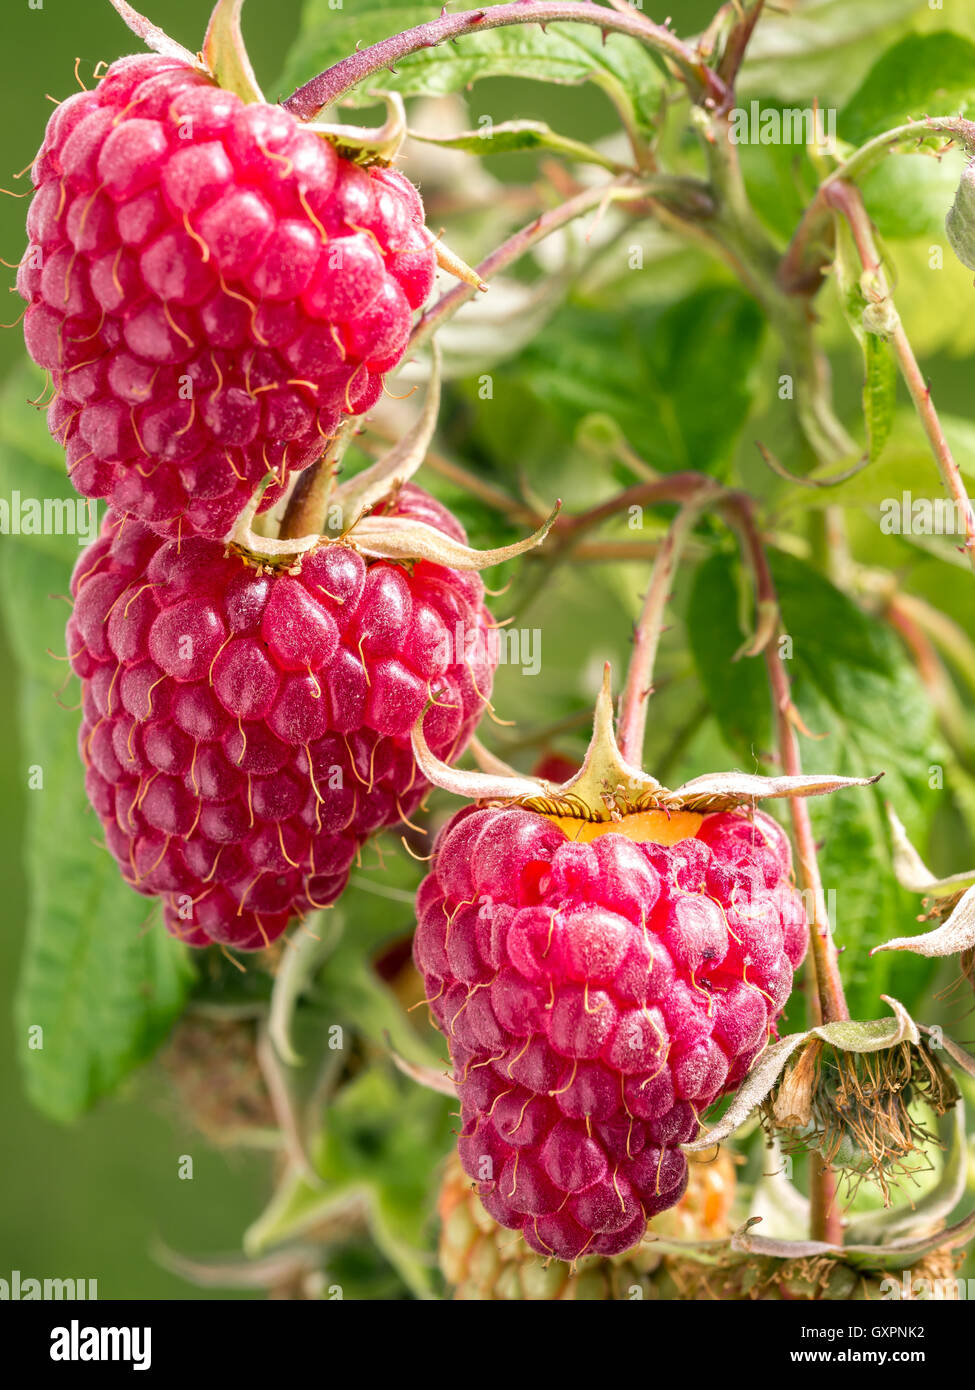 Ripe and juicy raspberries growing on shrub Stock Photo